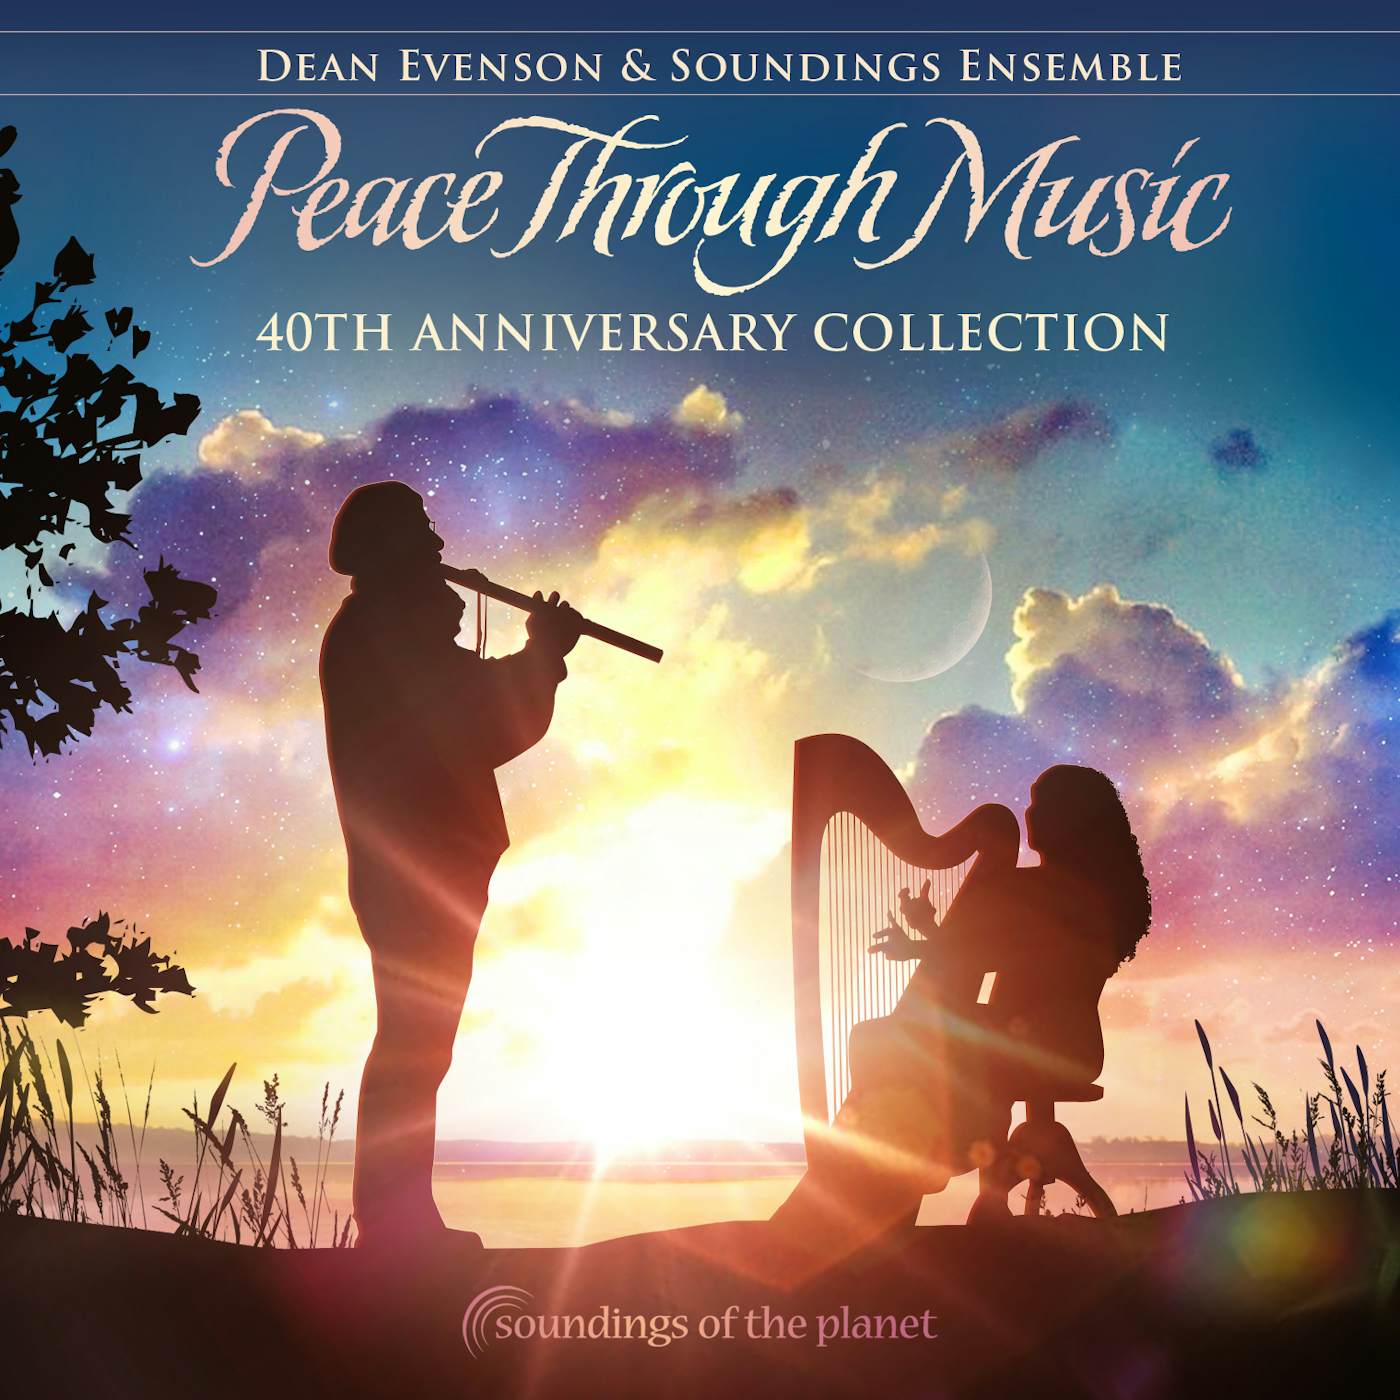 Dean Evenson PEACE THROUGH MUSIC 40TH ANNIVERSARY COLLECTION CD